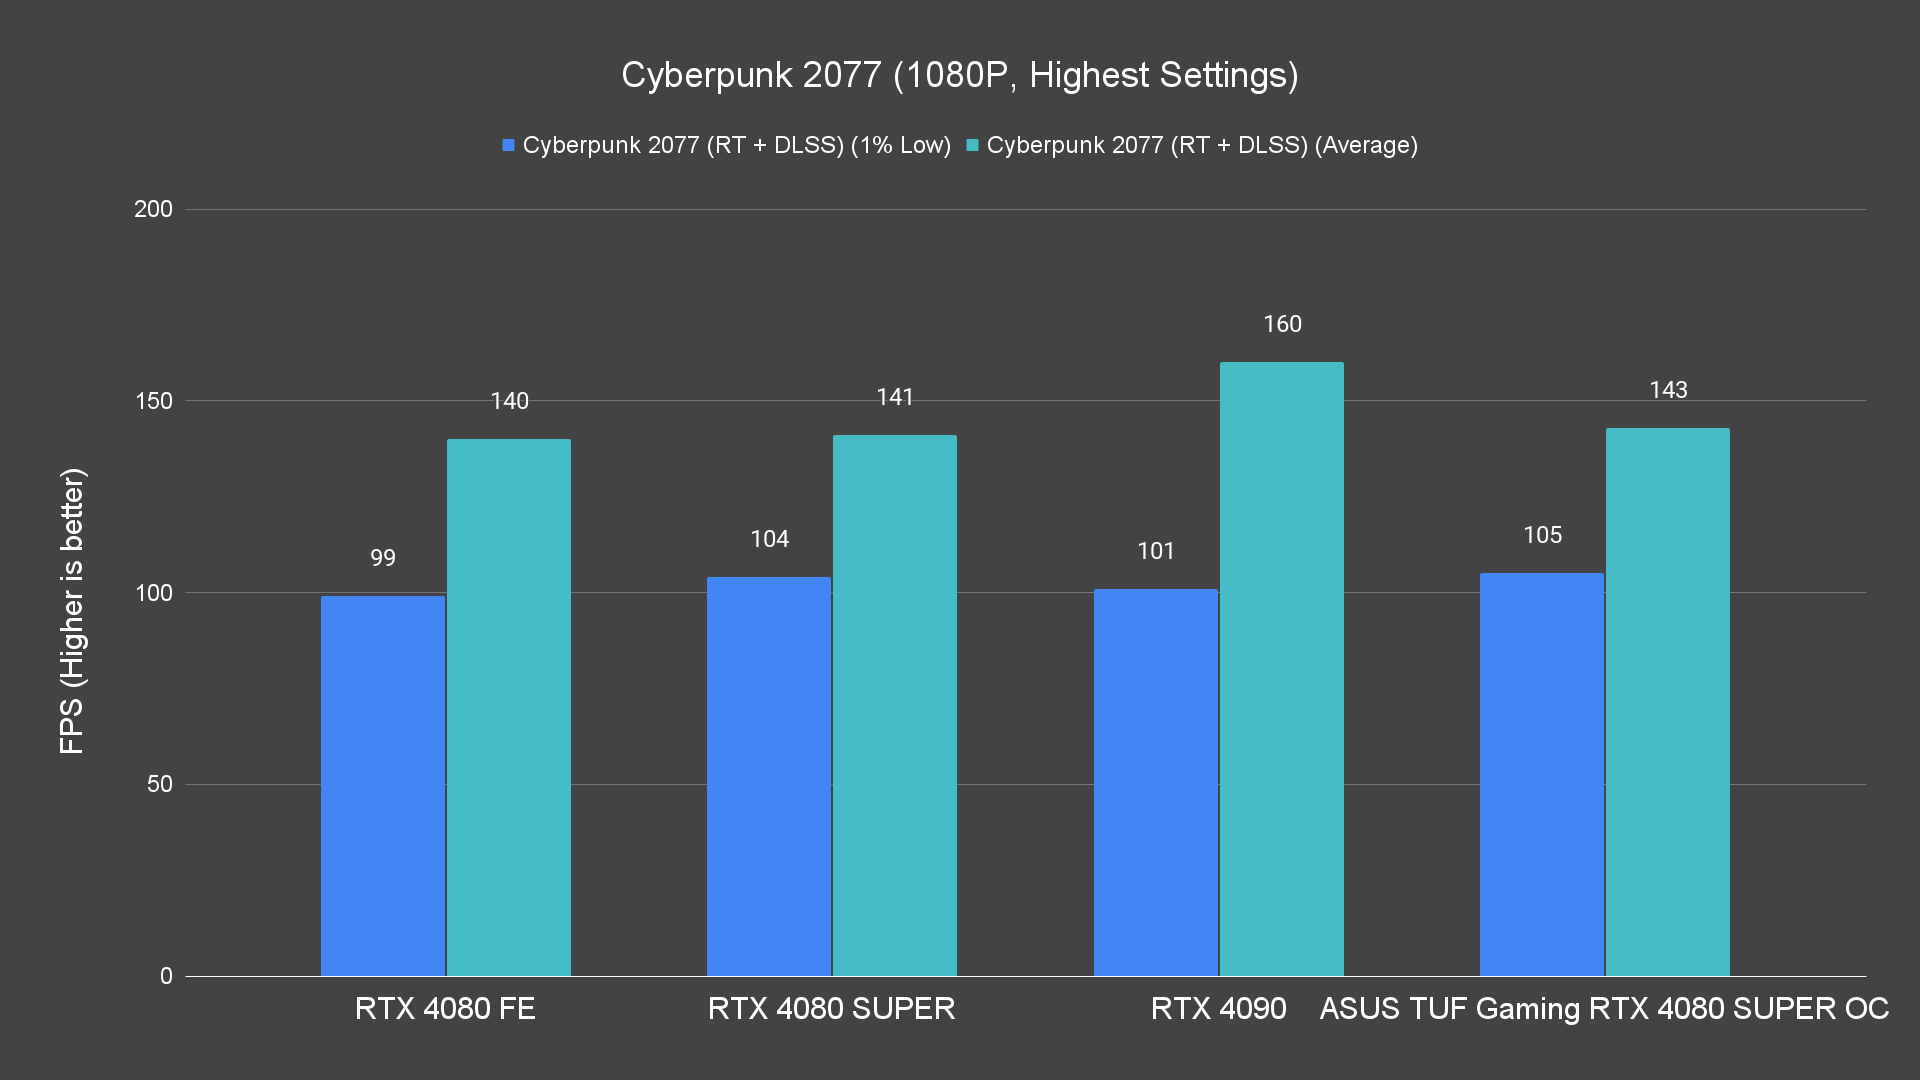 Cyberpunk 2077 (1080P, Highest Settings) (1)